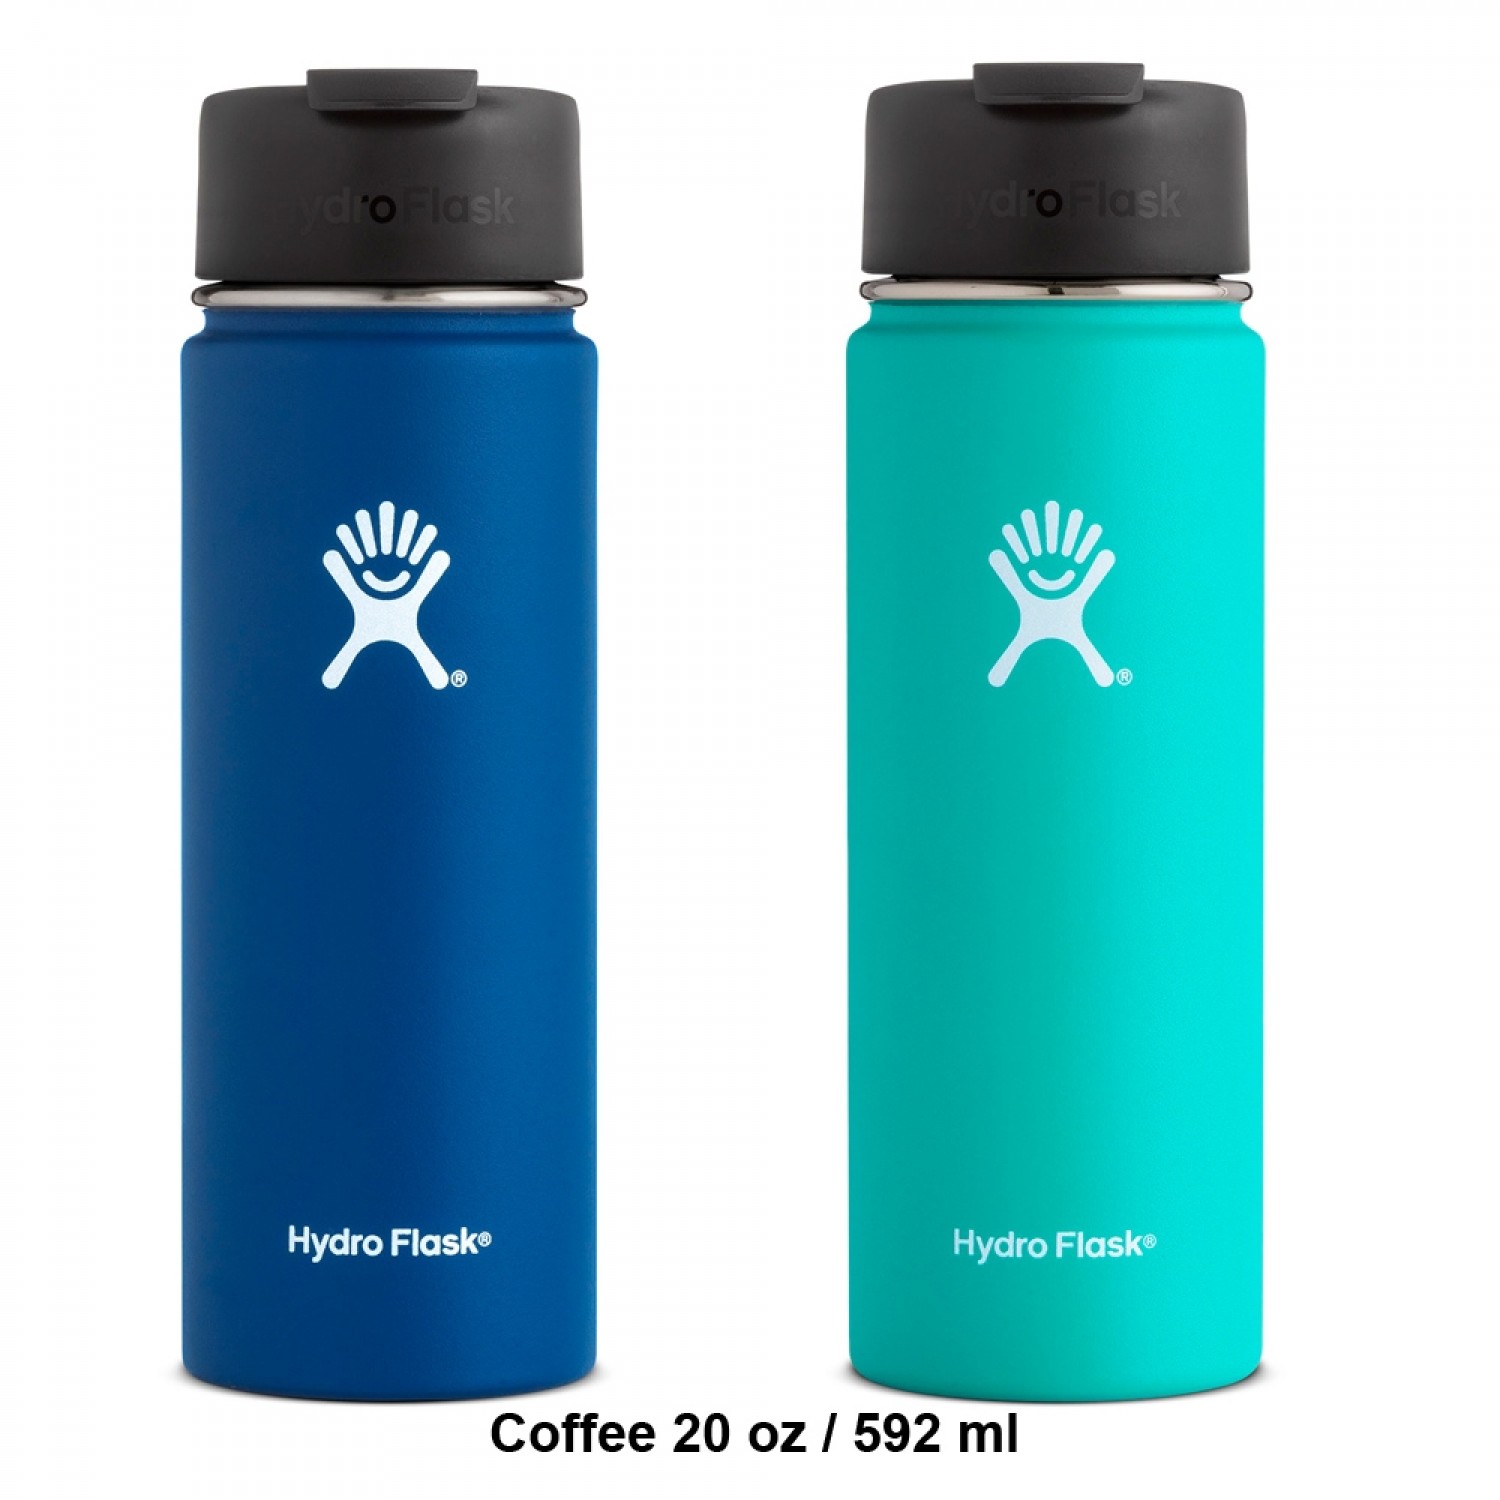 Hydro Flask Coffee to go Kaffeebecher 592 ml / 20 oz